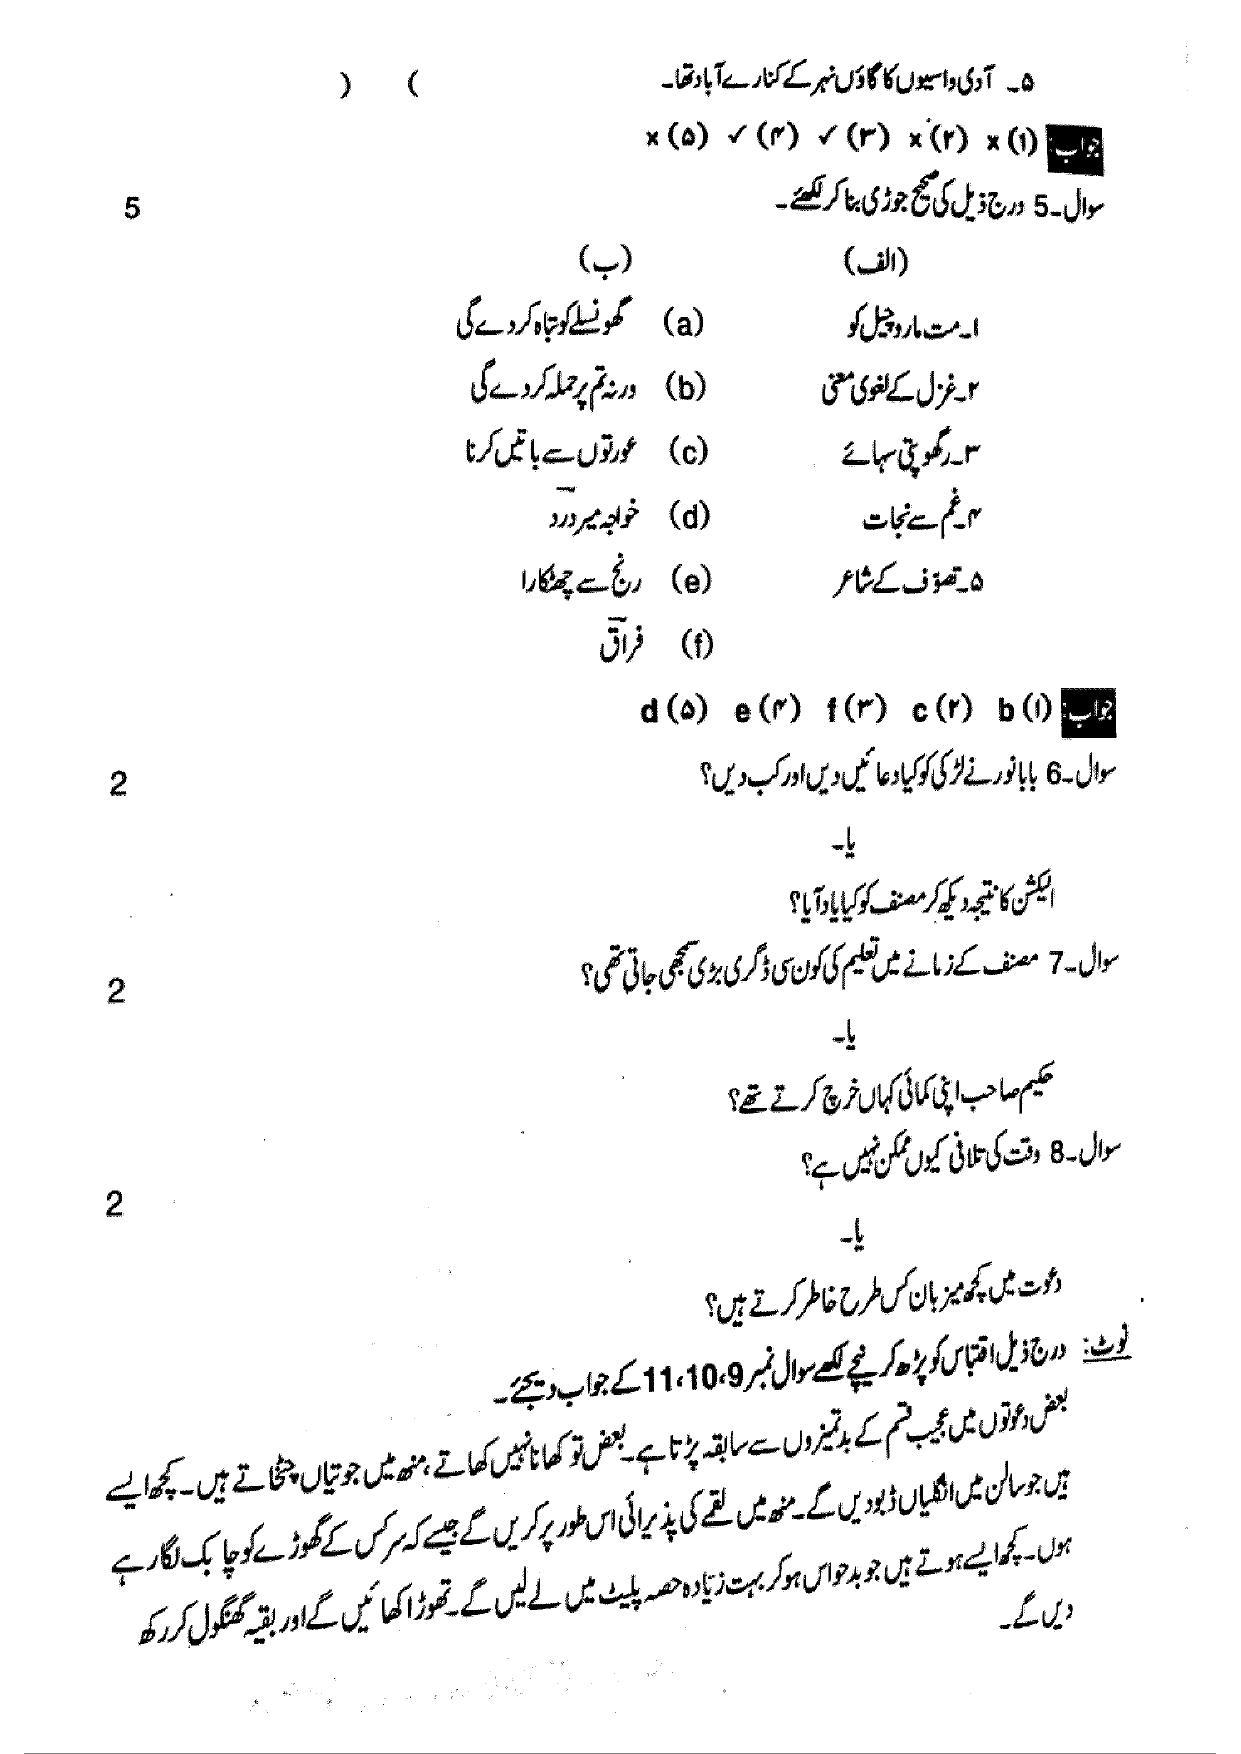 MP Board Class 12 Urdu 2019 Question Paper - Page 3